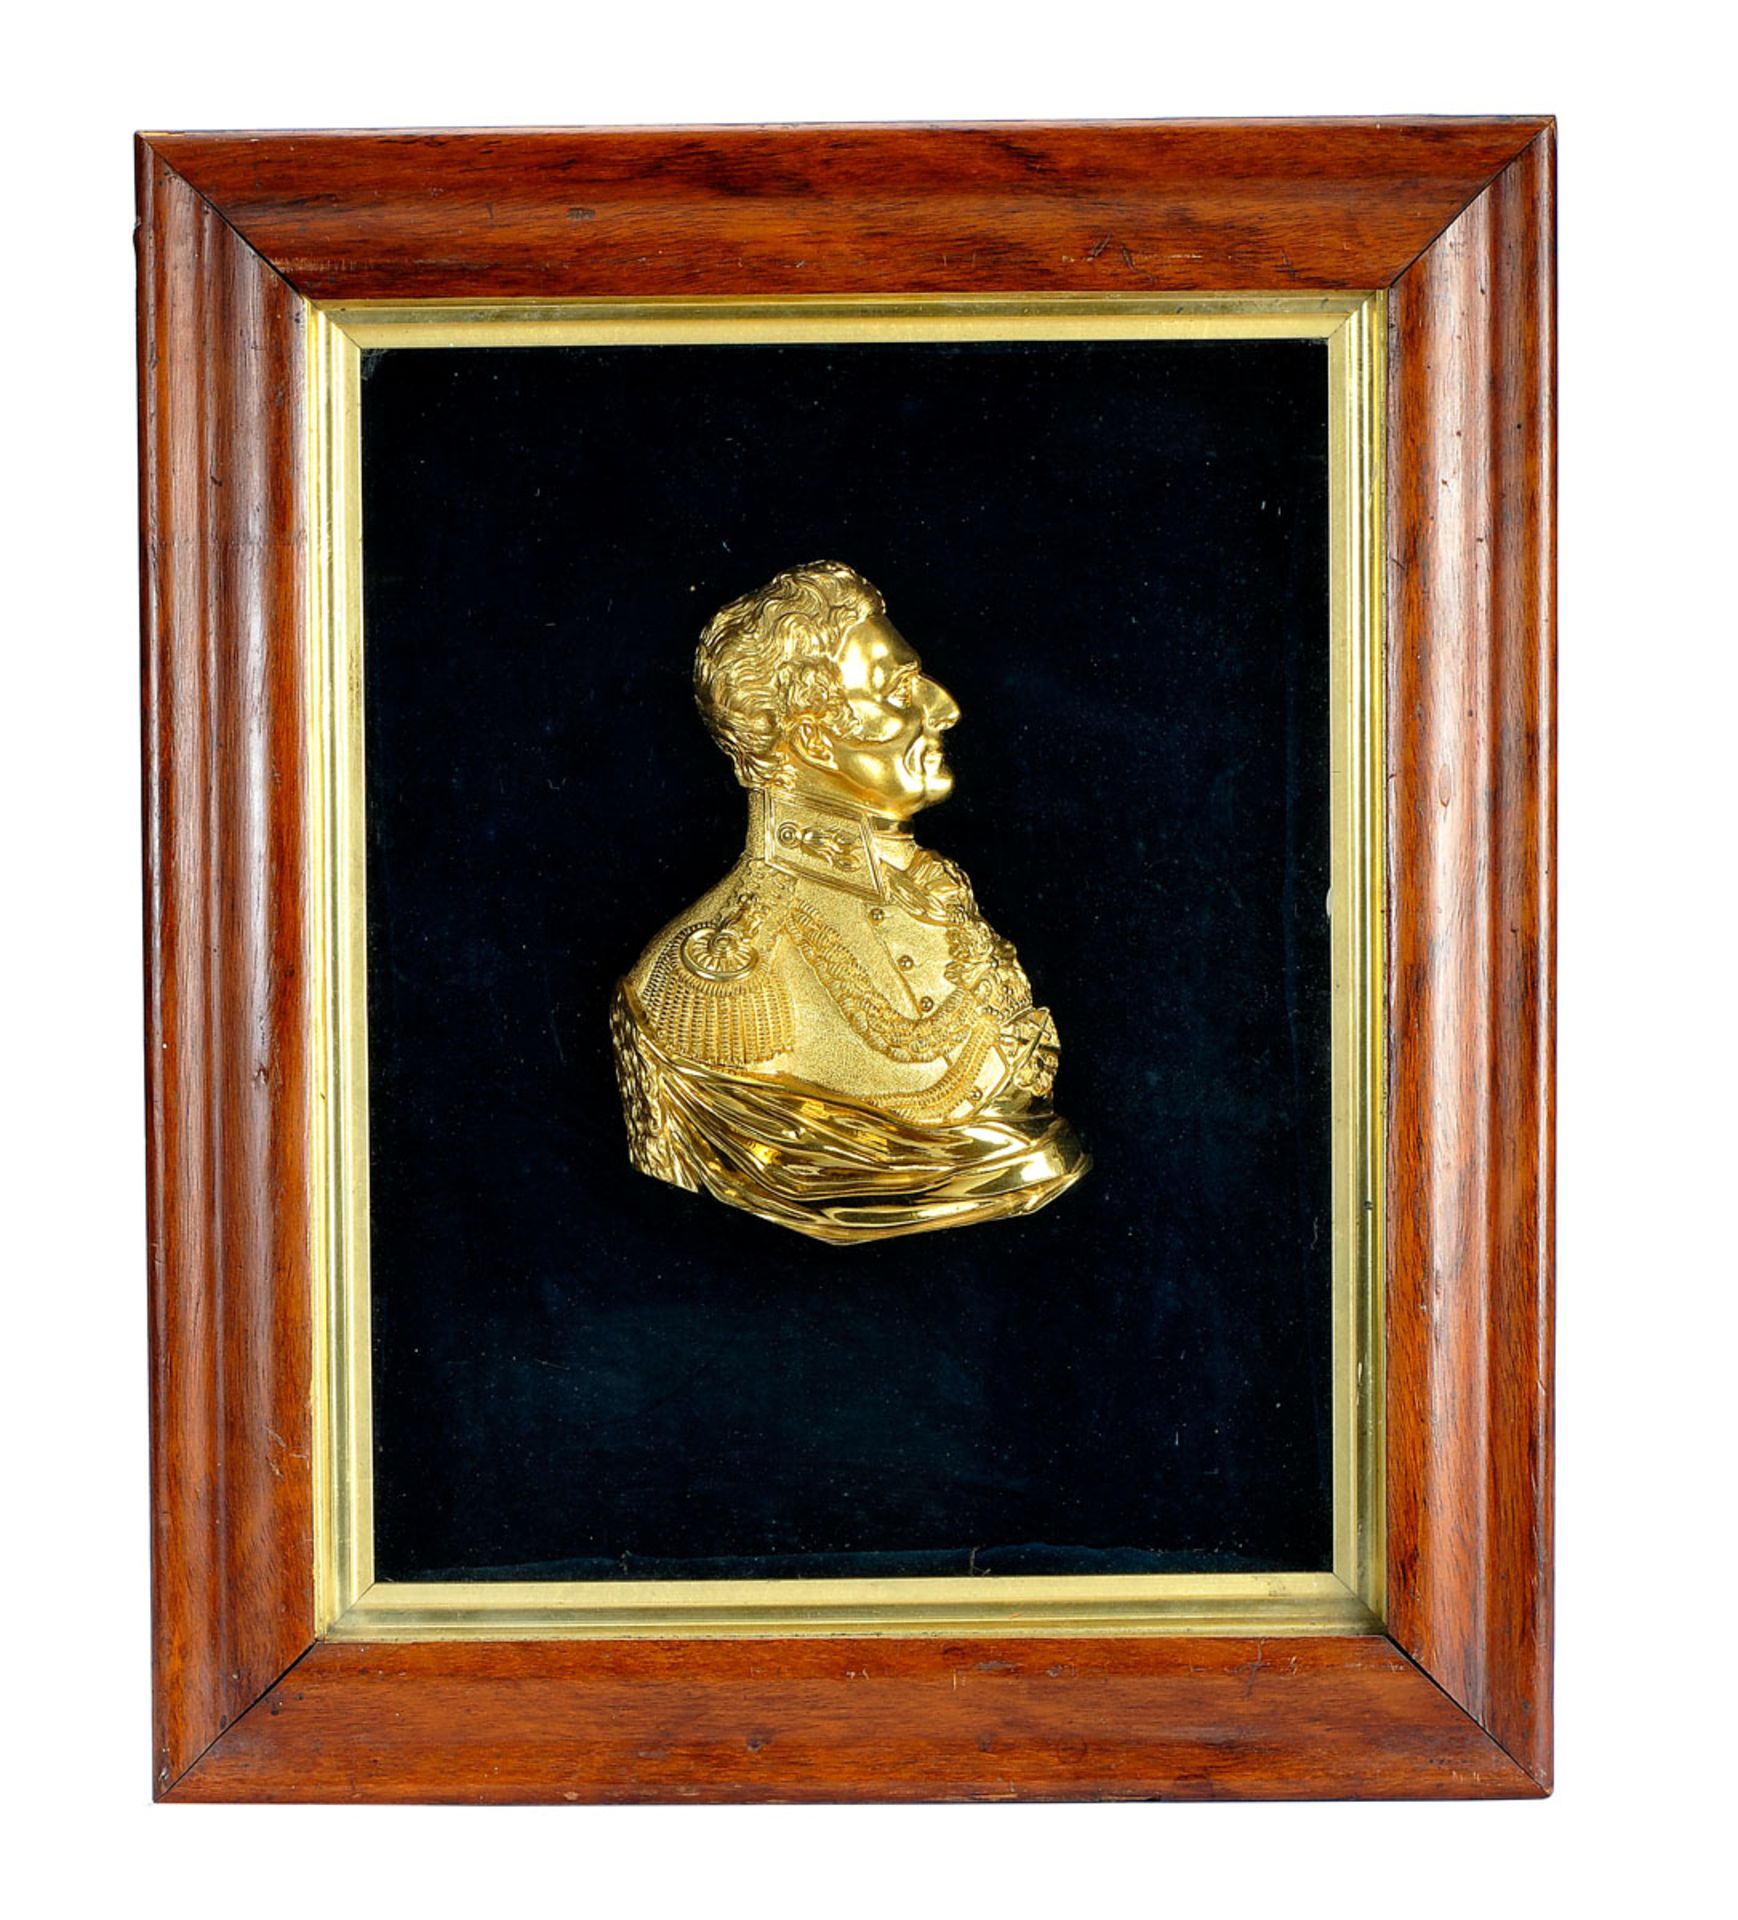 Bust of Lord Arthur Wellesley, 1st Duke of Wellington (1769-1852), gilt bronze sculpture en